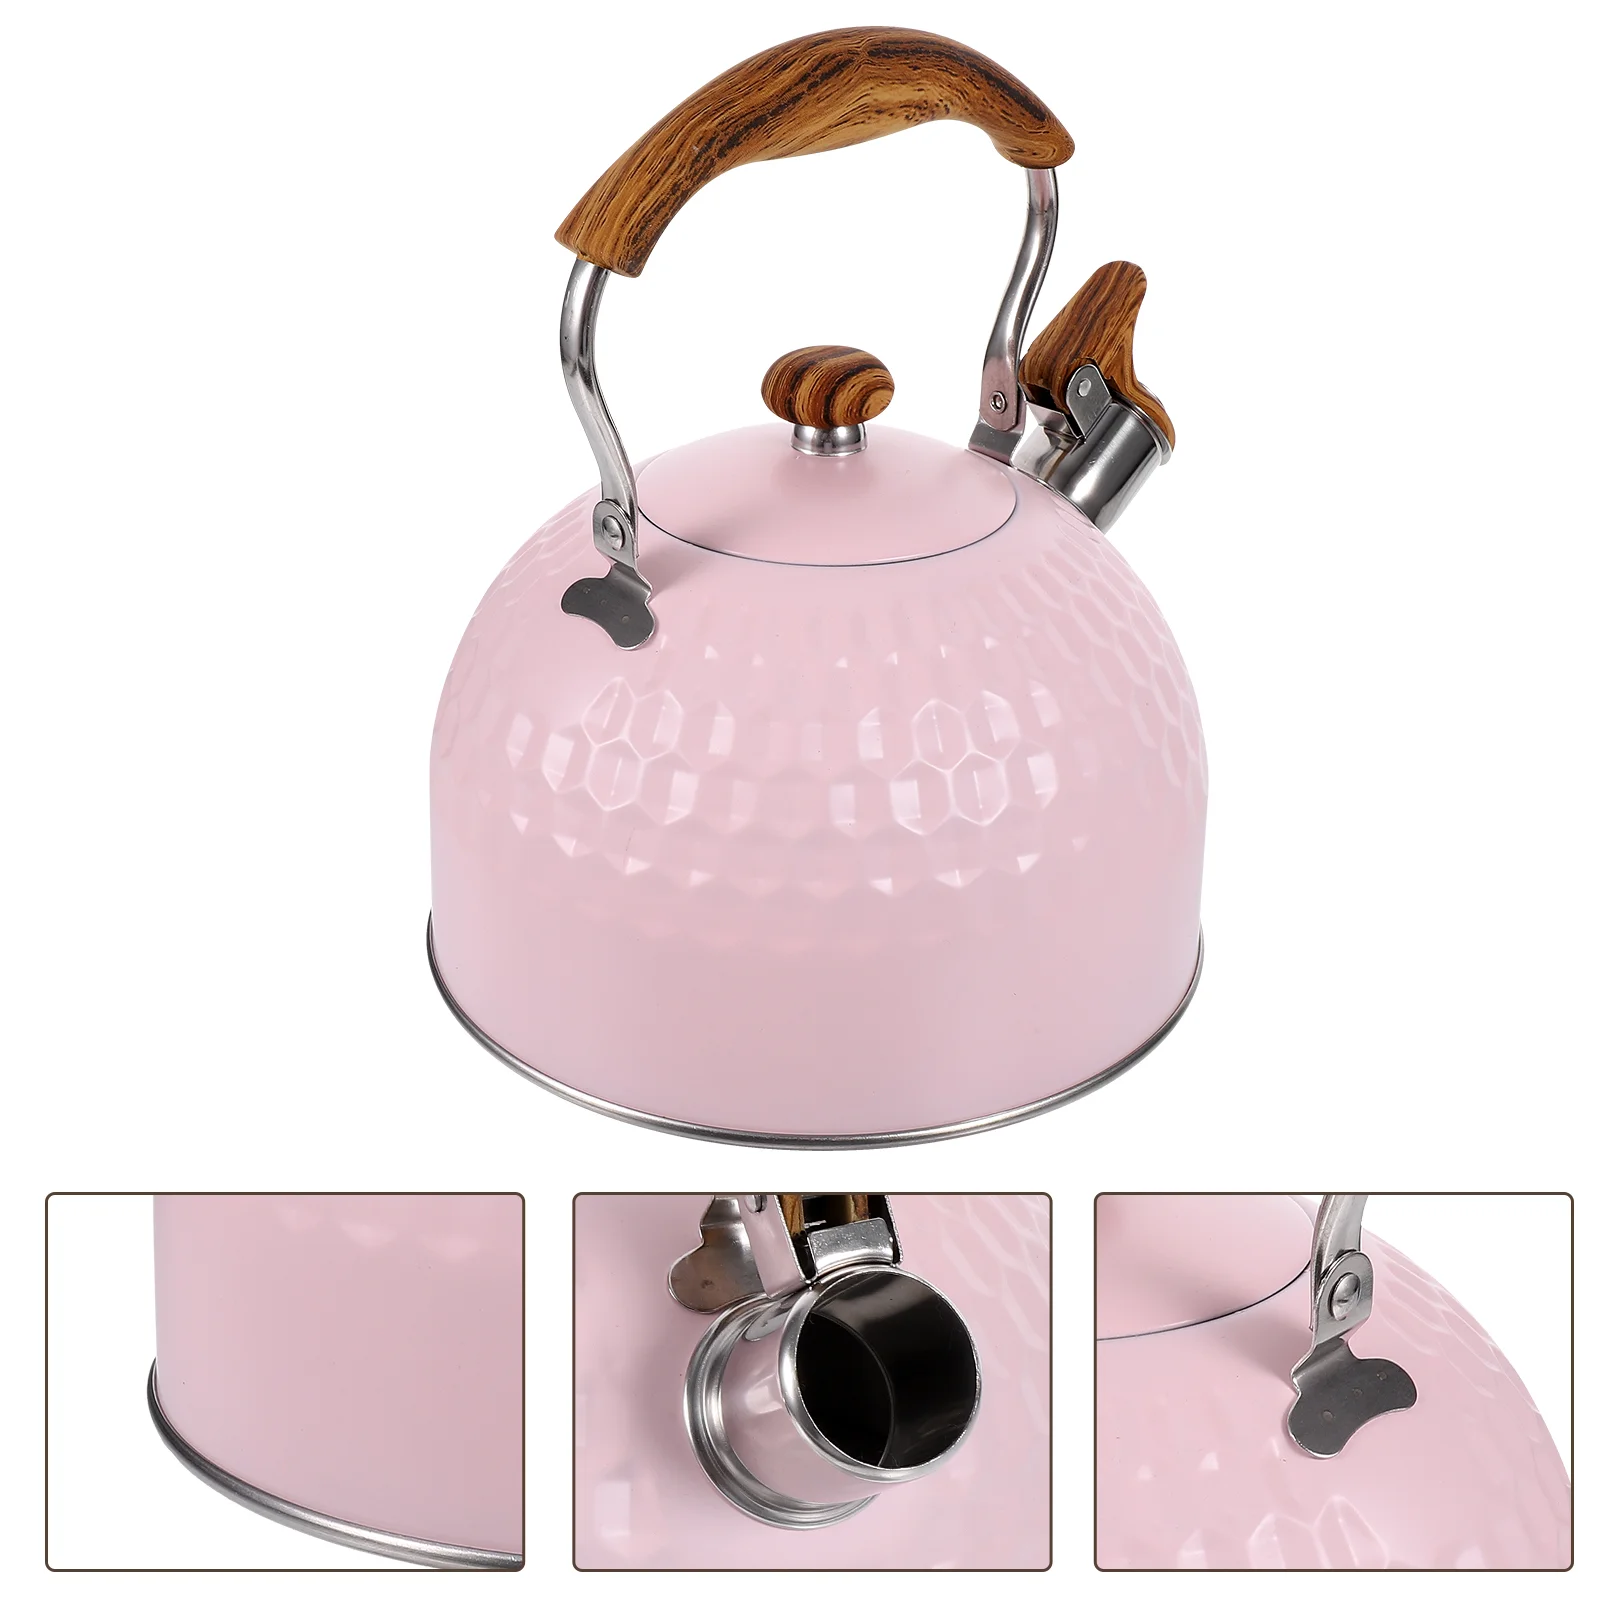 Nuolux Kettle Tea Whistling Stovetop Teapot Steel Stainless